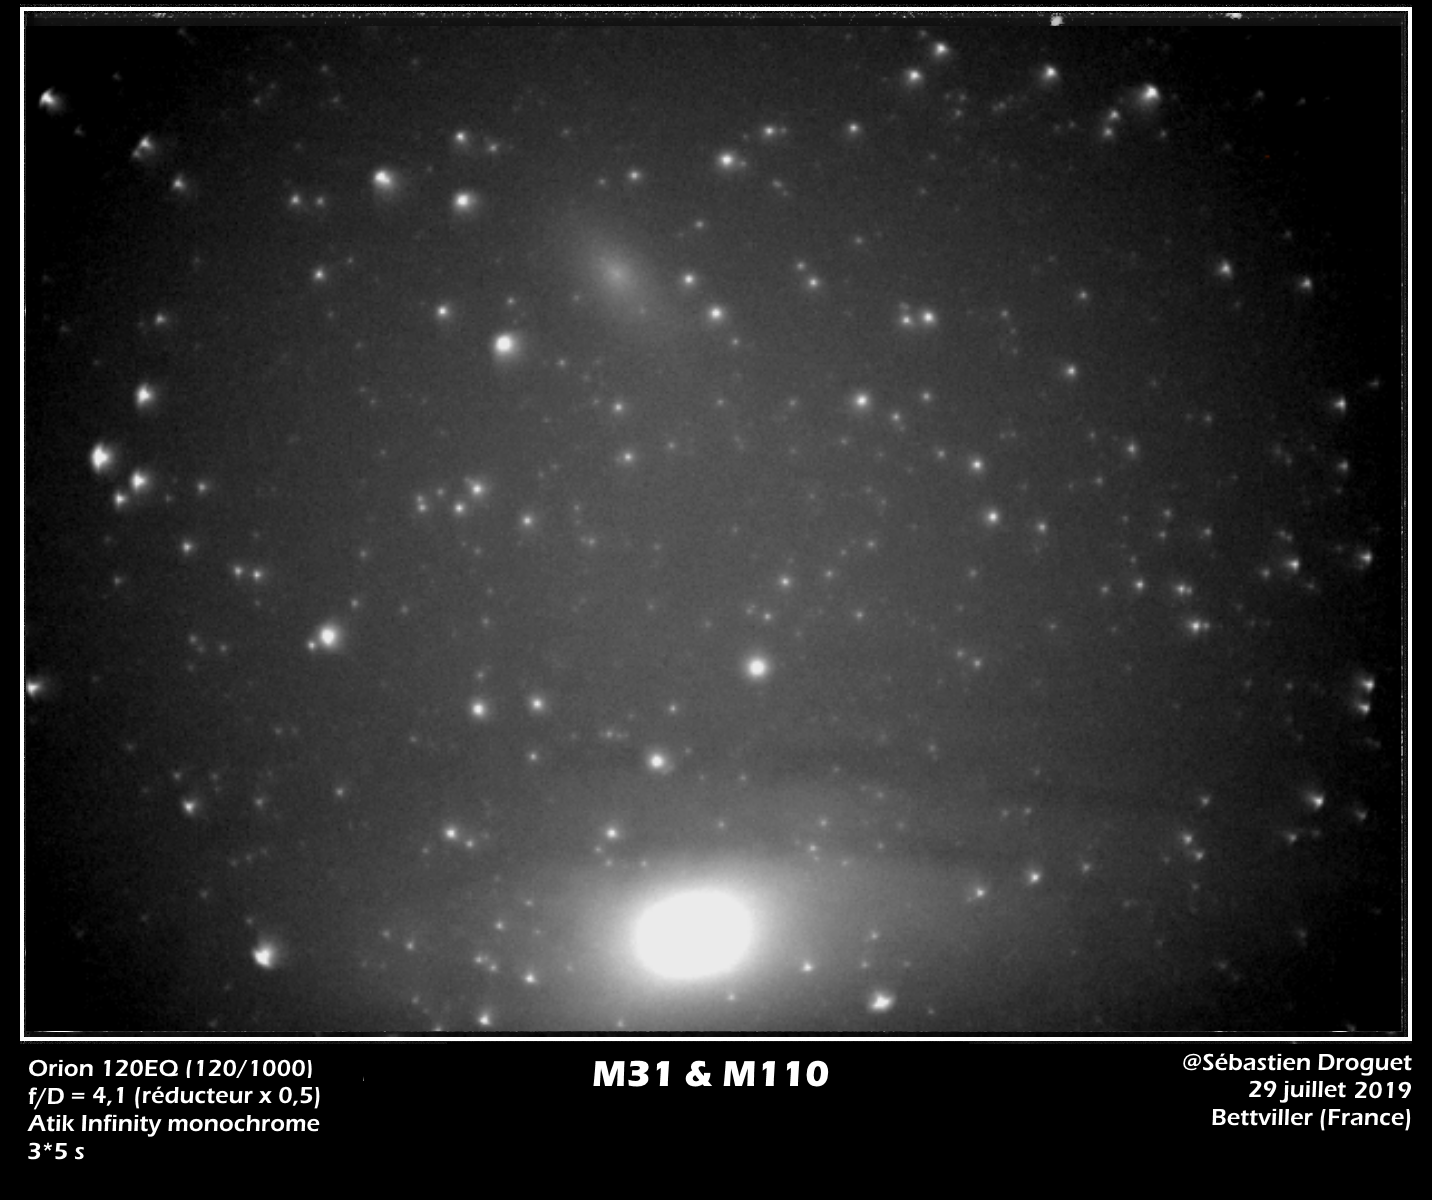 M31 la galaxie d'Andromède & M110 galaxie satellite